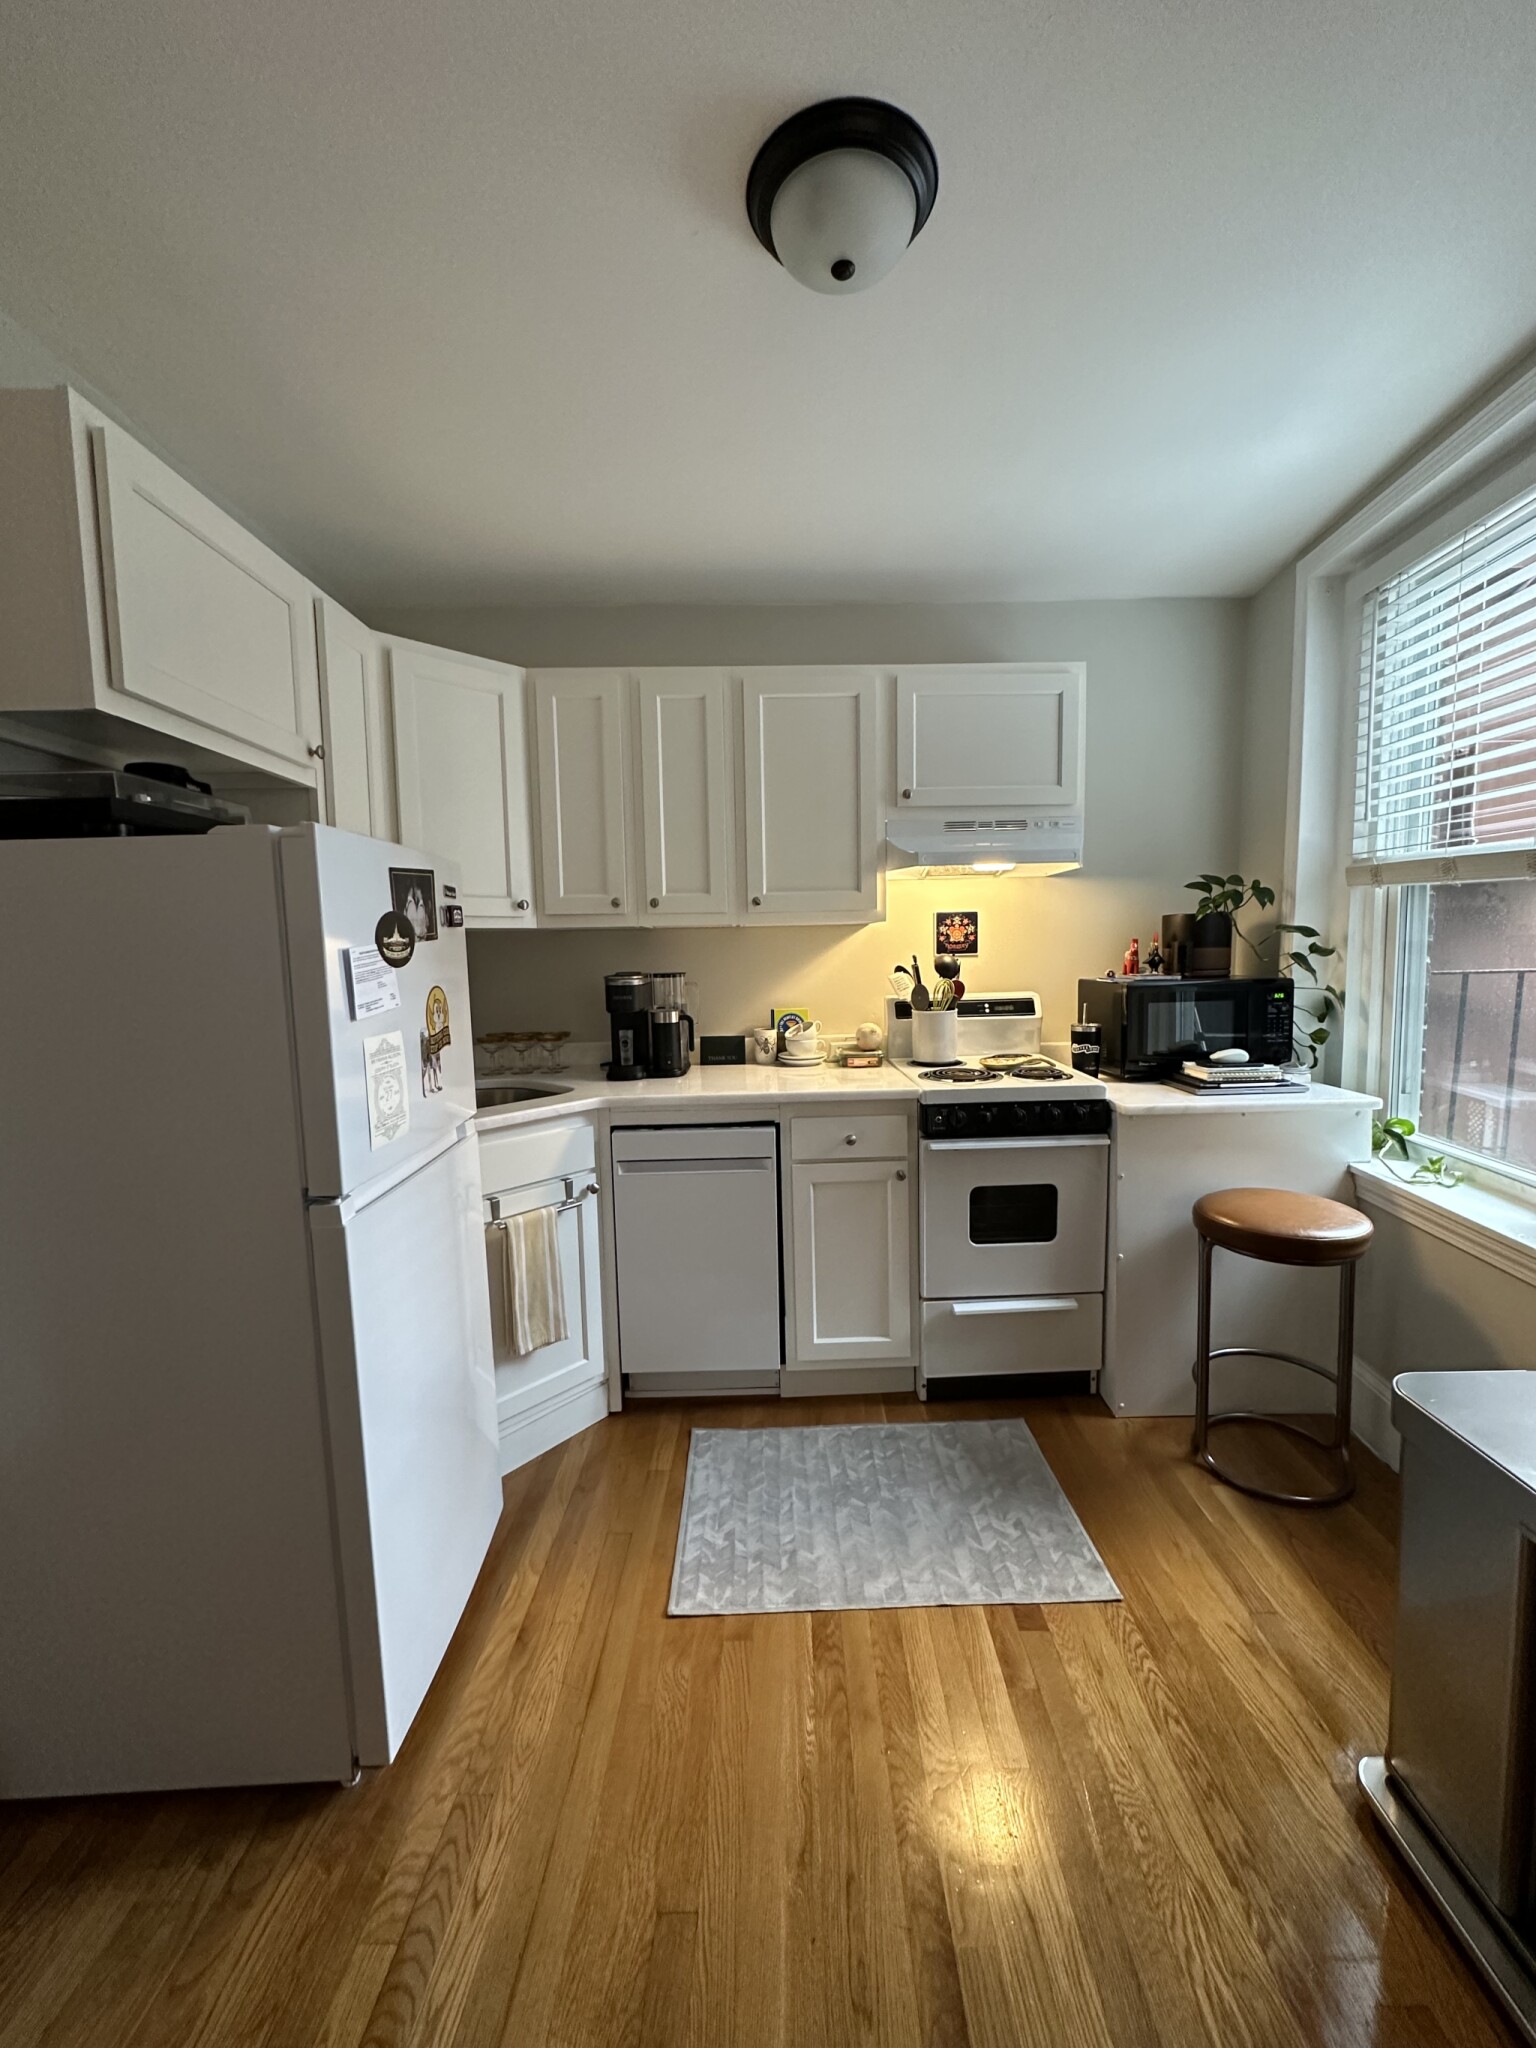 Photos of apartment on Myrtle St.,Boston MA 02113